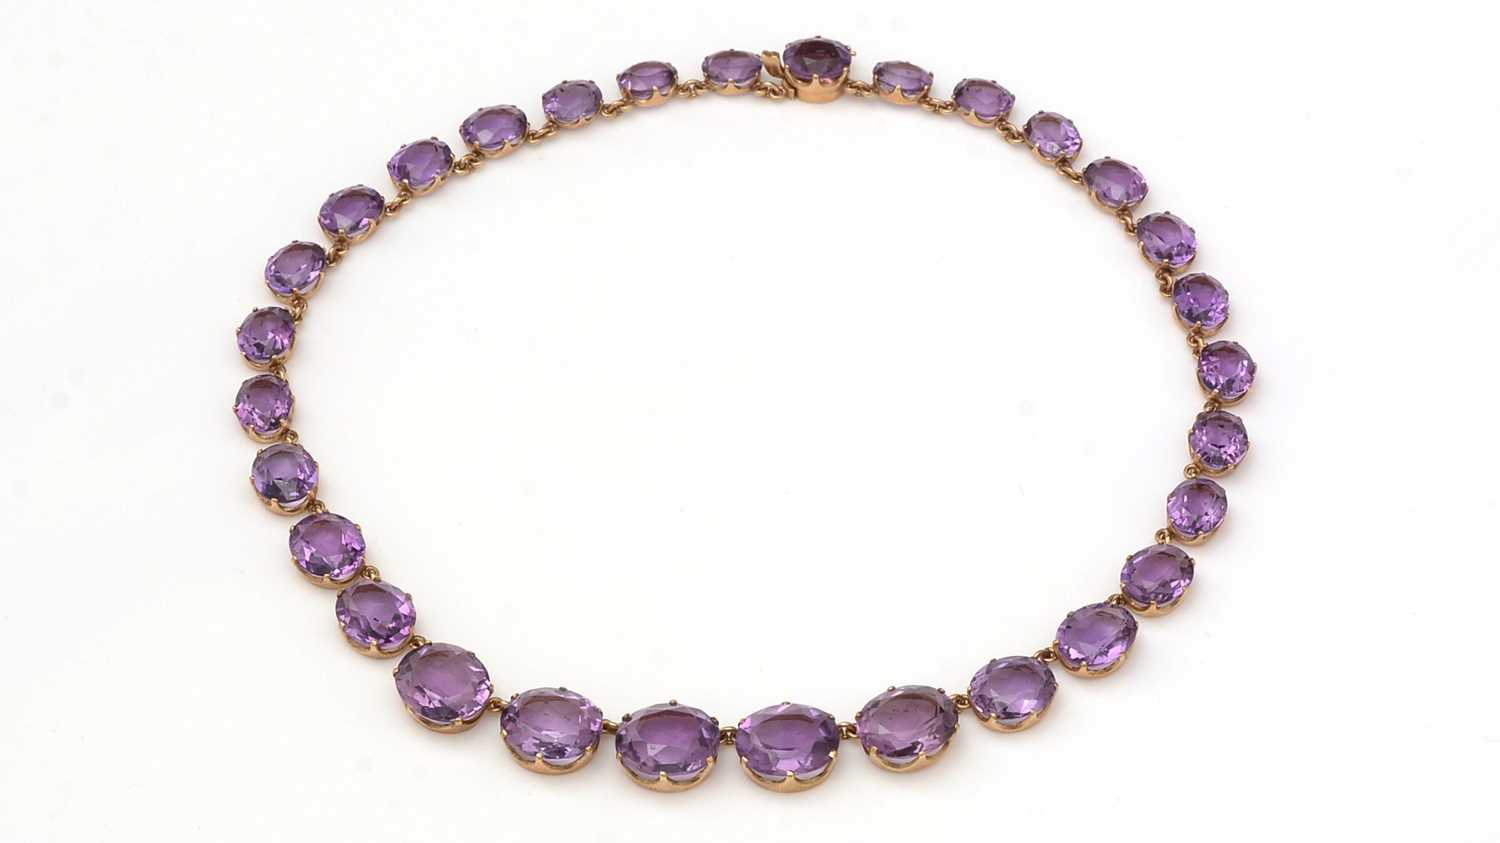 Lot 402 - An Edwardian style amethyst necklace